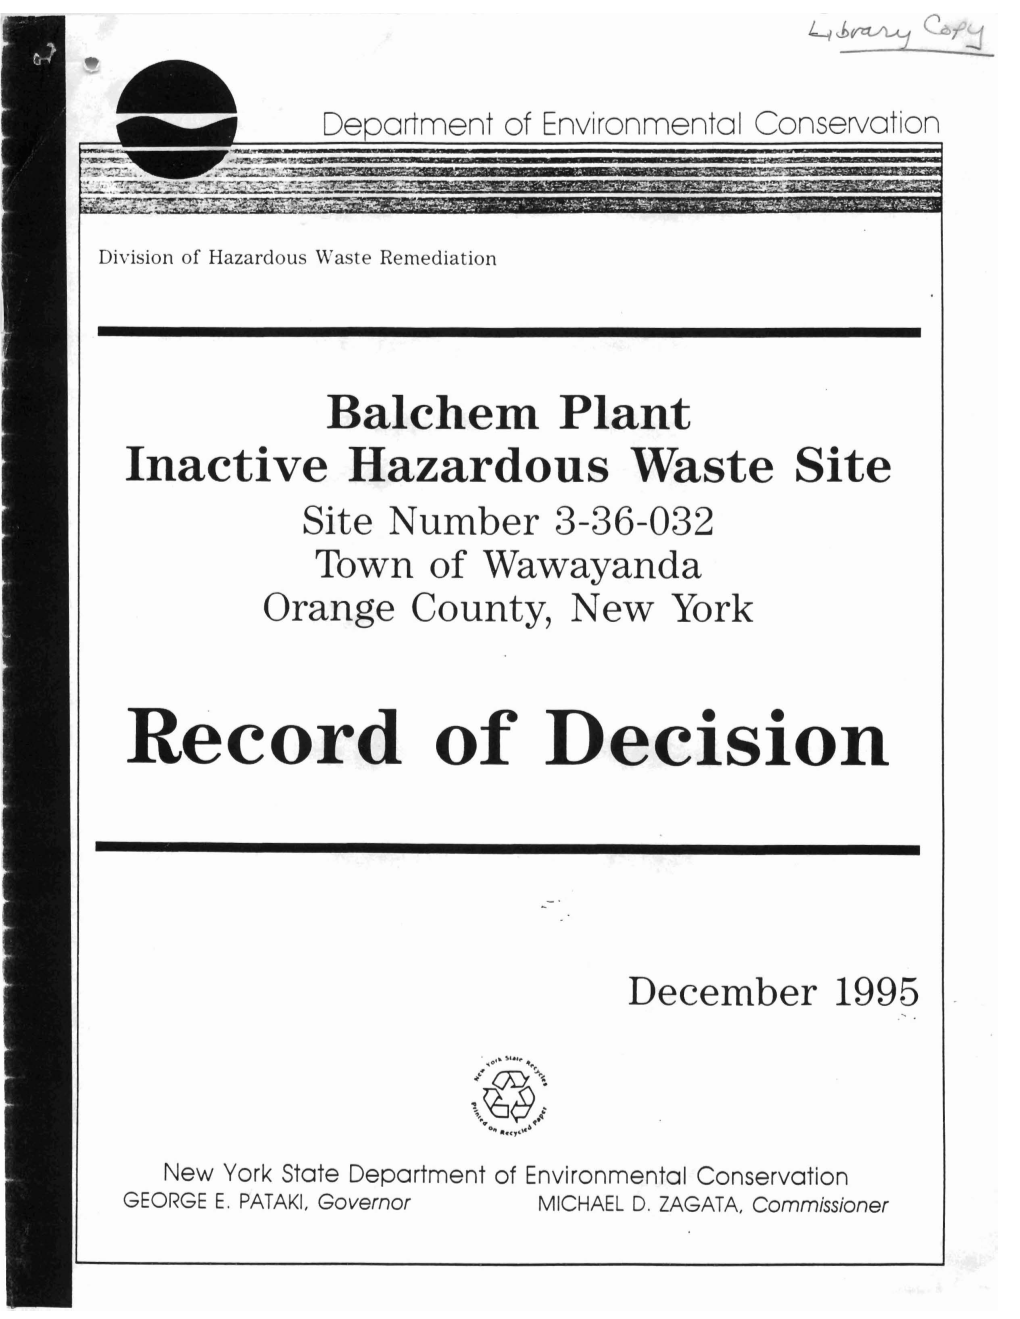 Balchem Plant Inactive Hazardous Waste Site Wawayanda (T), Orange County, New York Site No